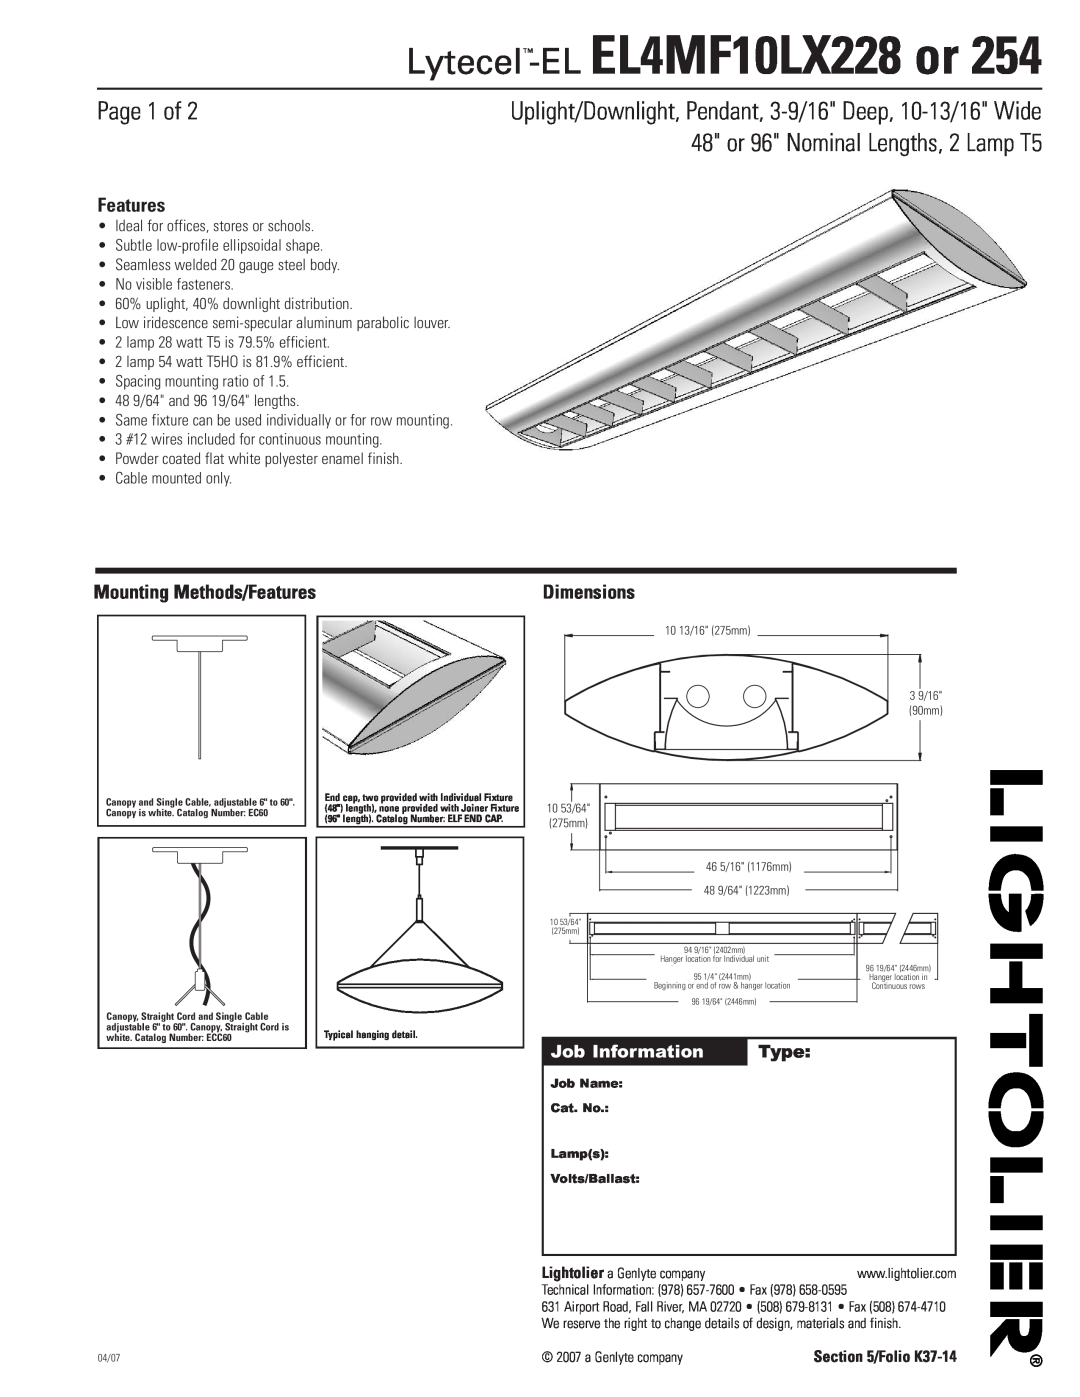 Lightolier EL4MF10LX228 or 254 dimensions Lytecel-EL EL4MF10LX228 or, Page 1 of, 48 or 96 Nominal Lengths, 2 Lamp T5, Type 